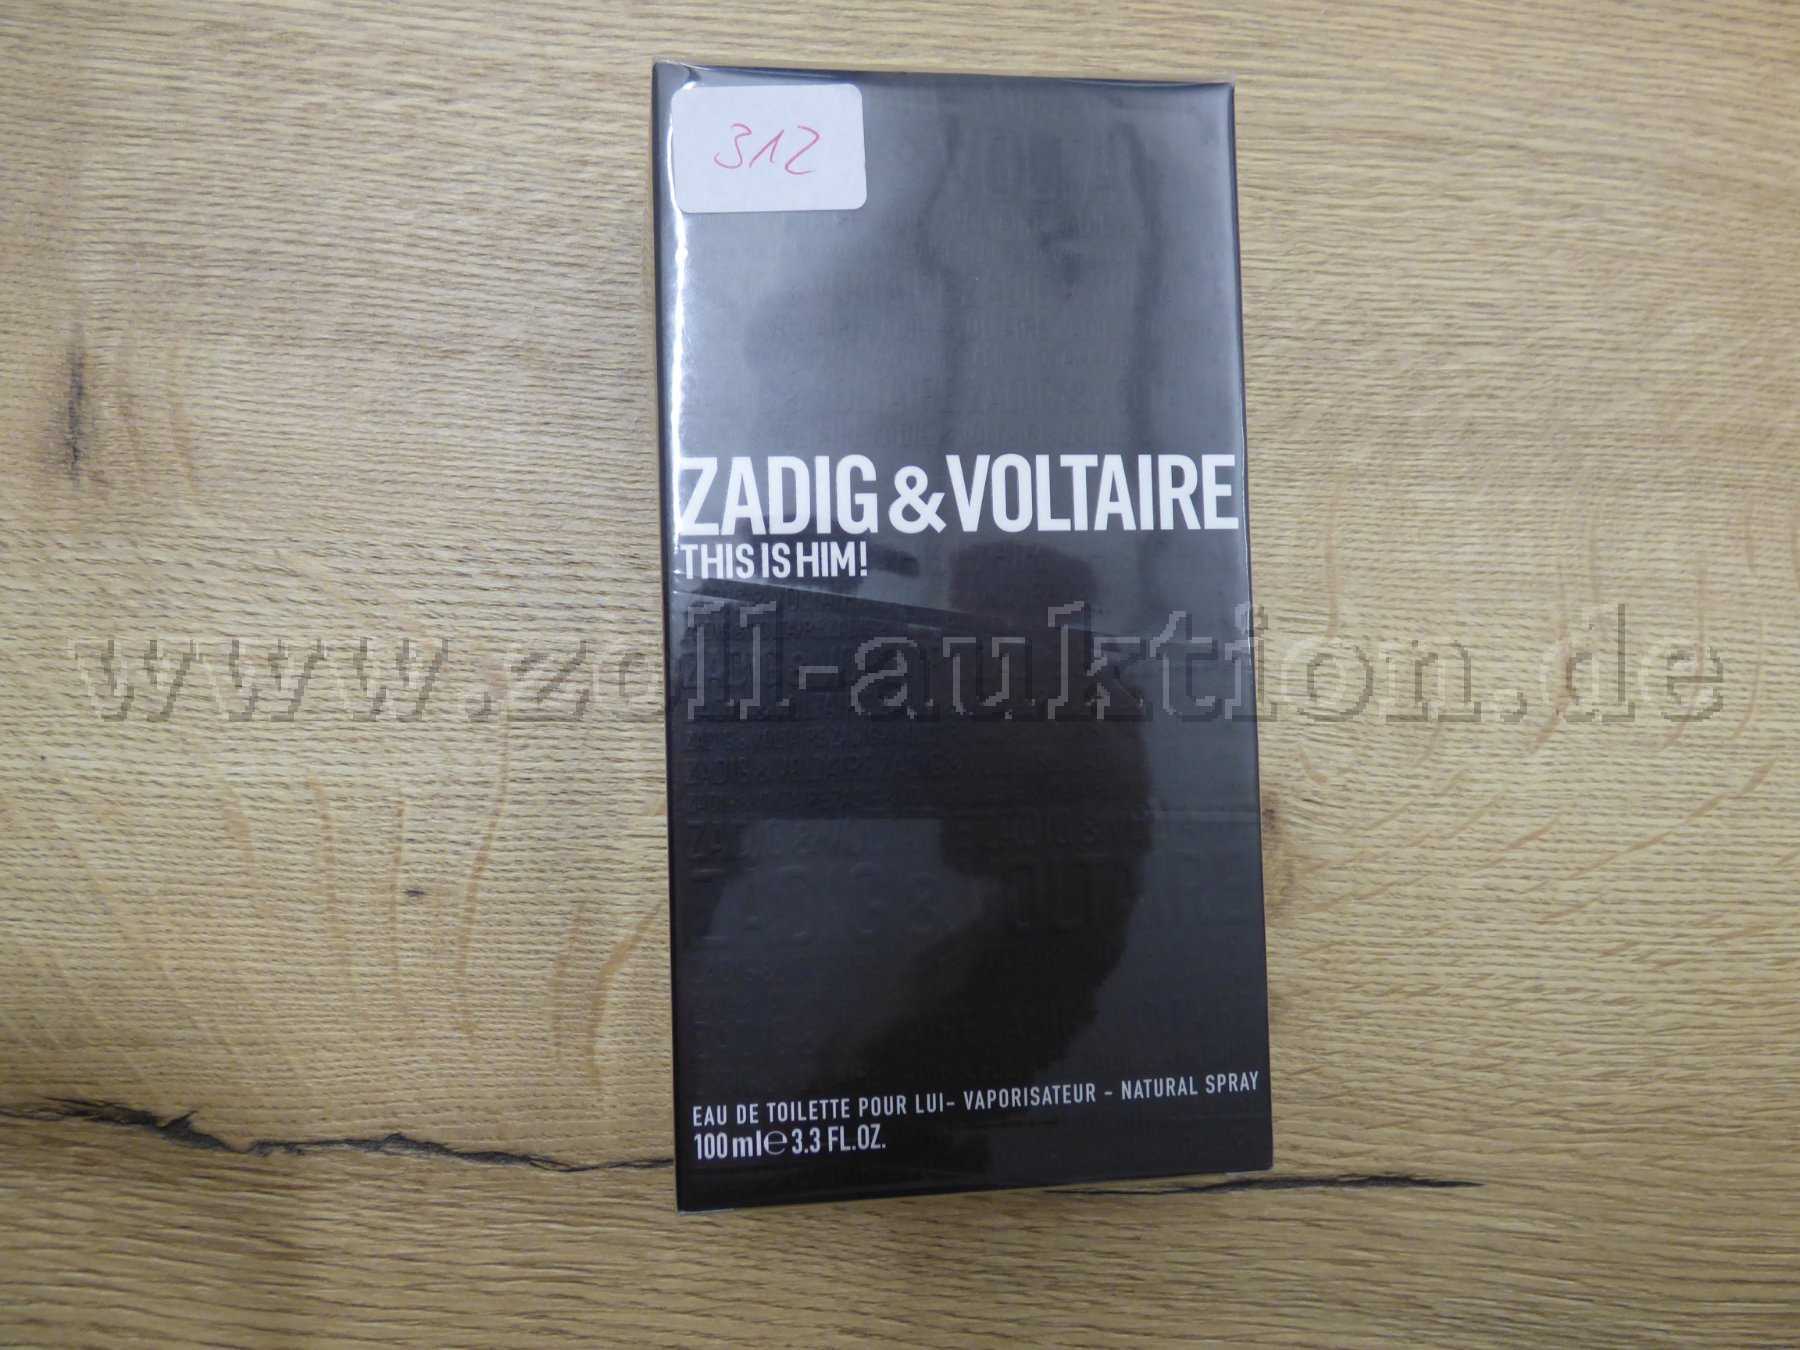 Zadig&Voltaire Parfüm